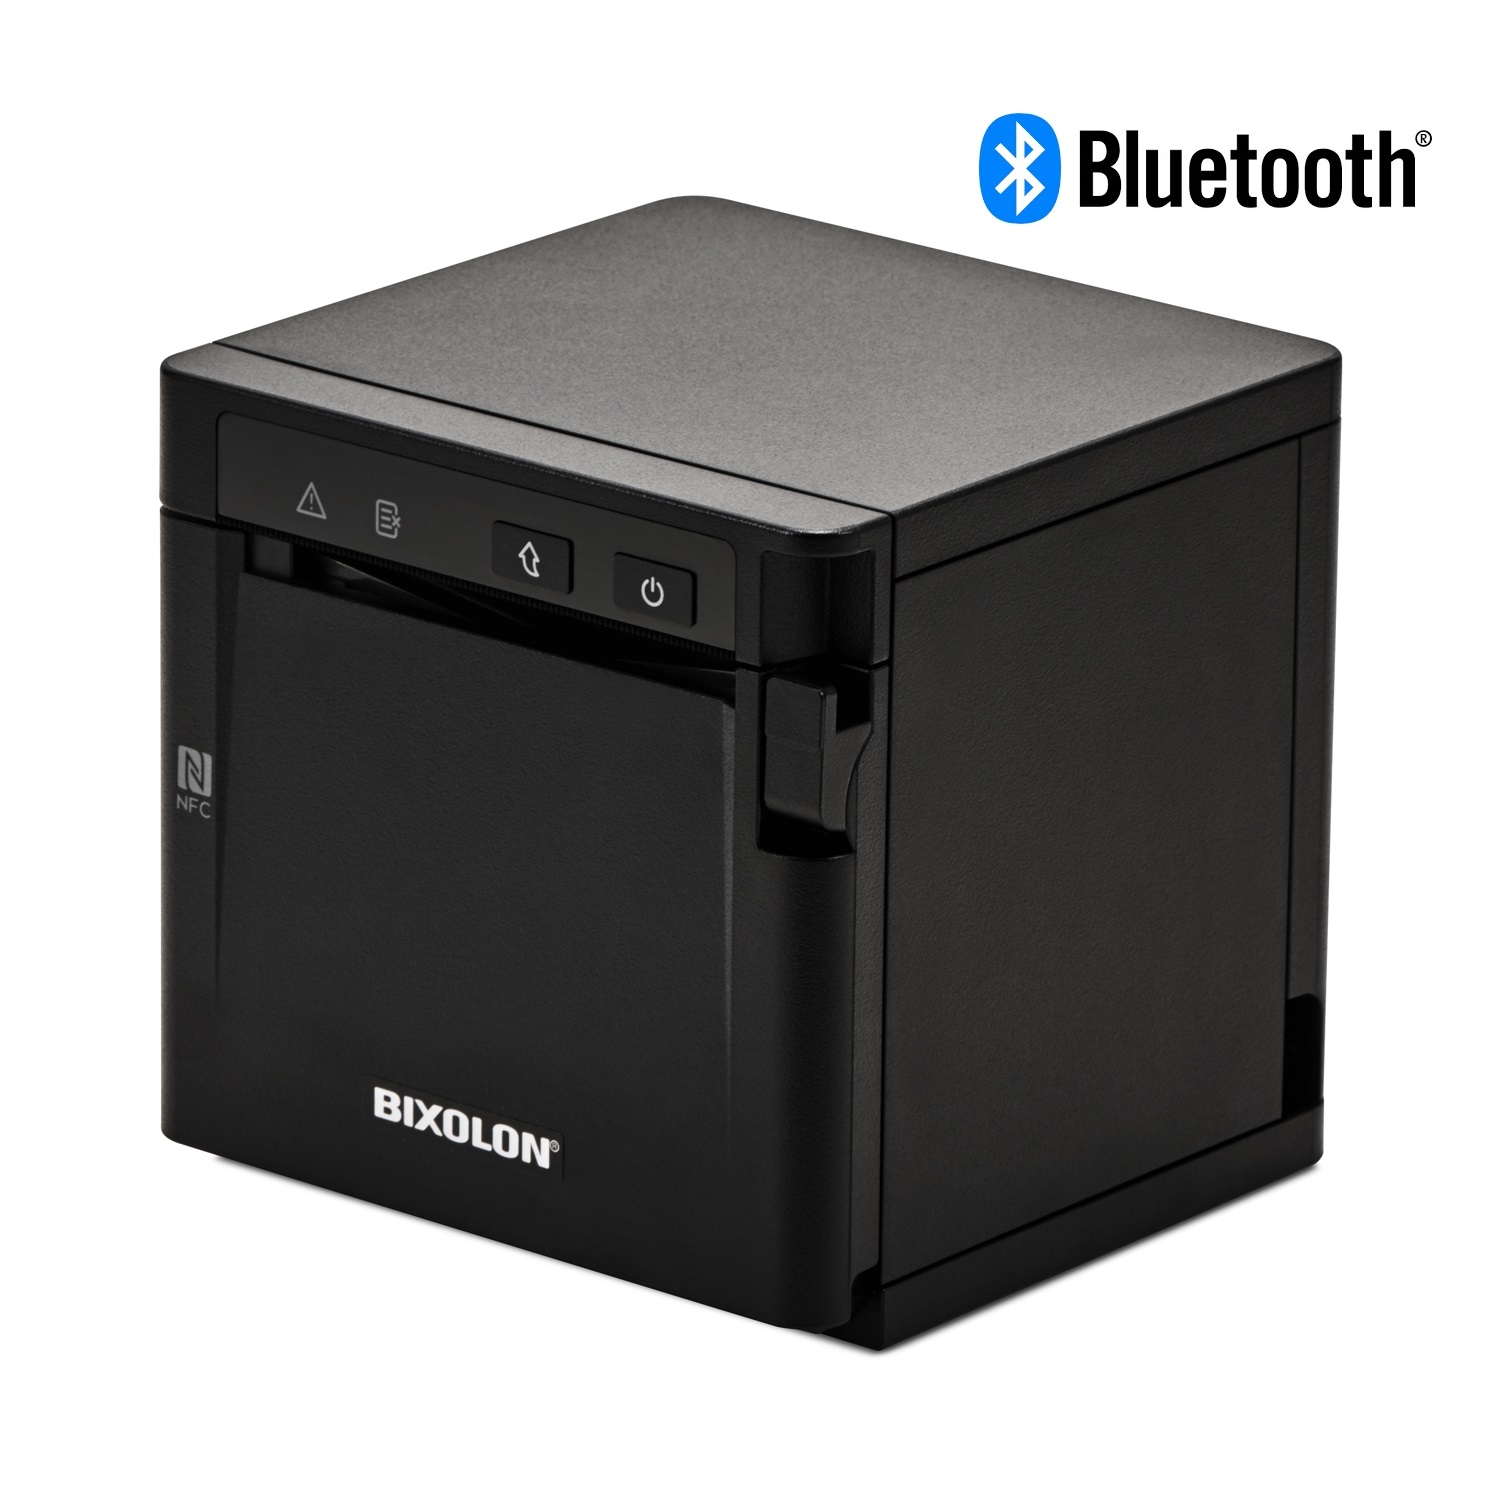 portable bluetooth printer for ipad